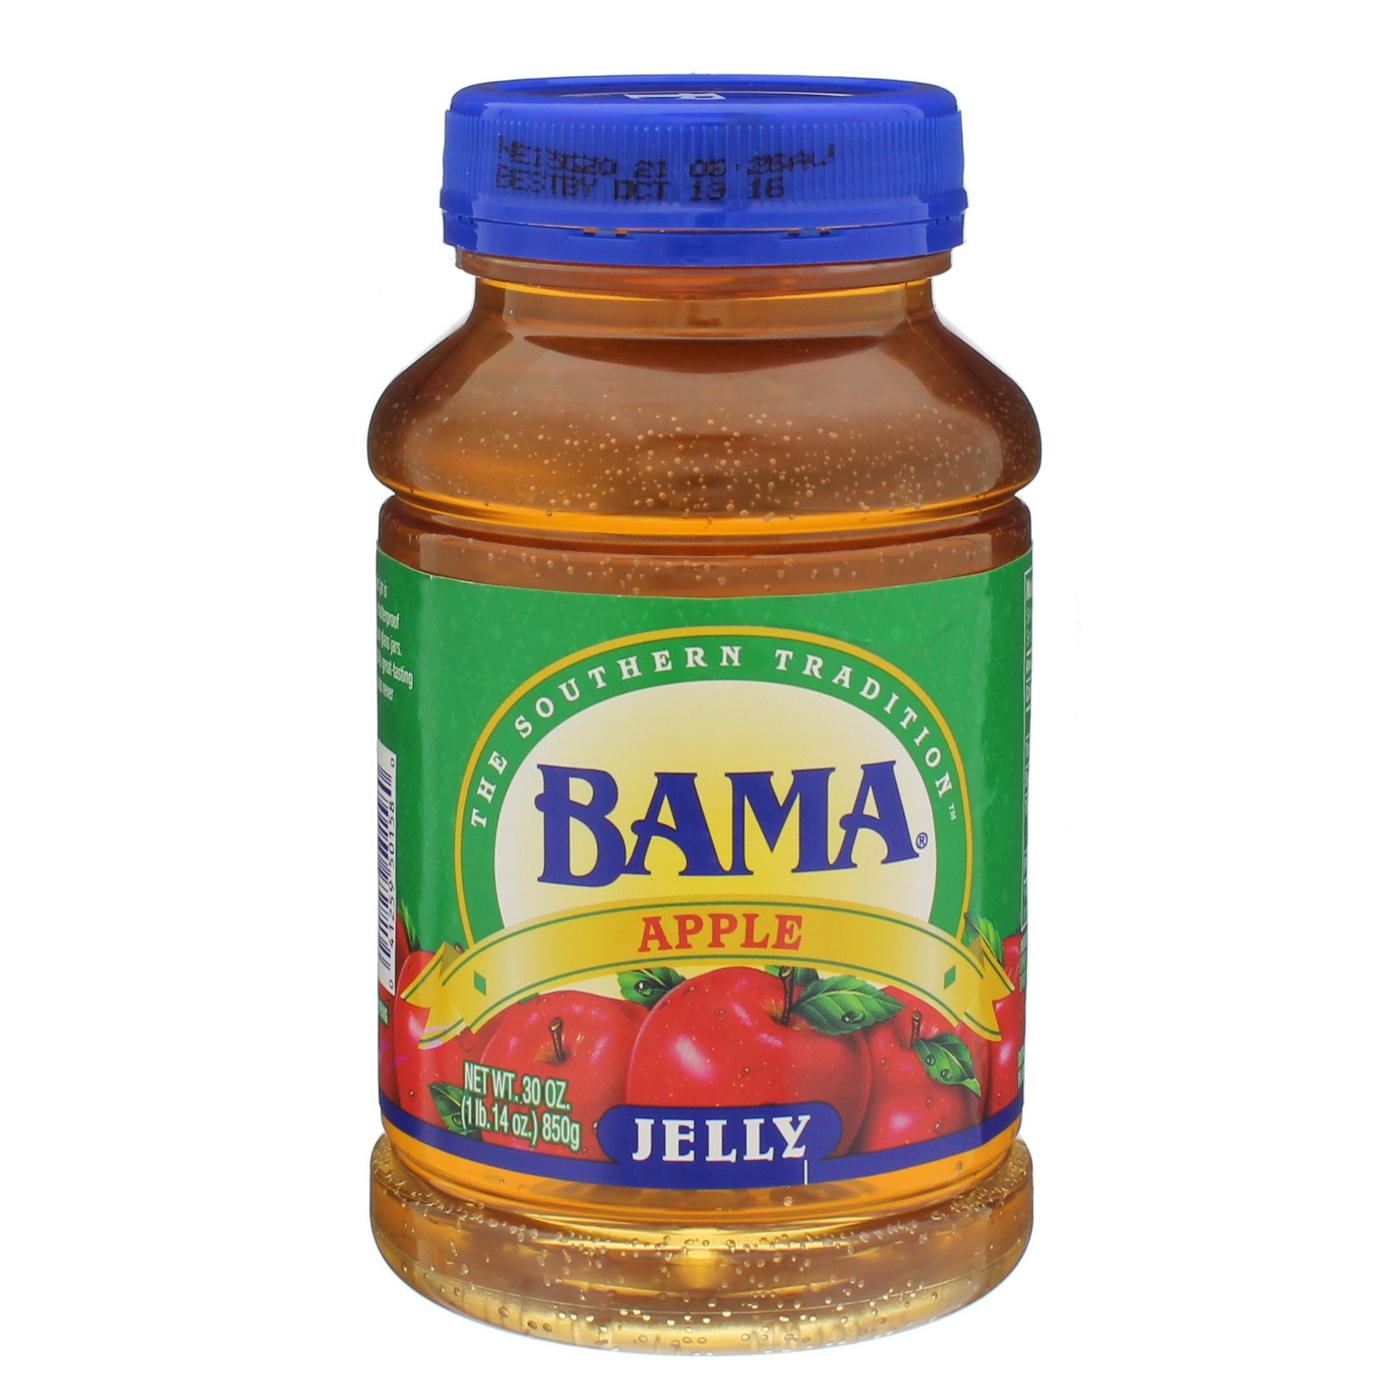 Bama Apple Jelly; image 1 of 2